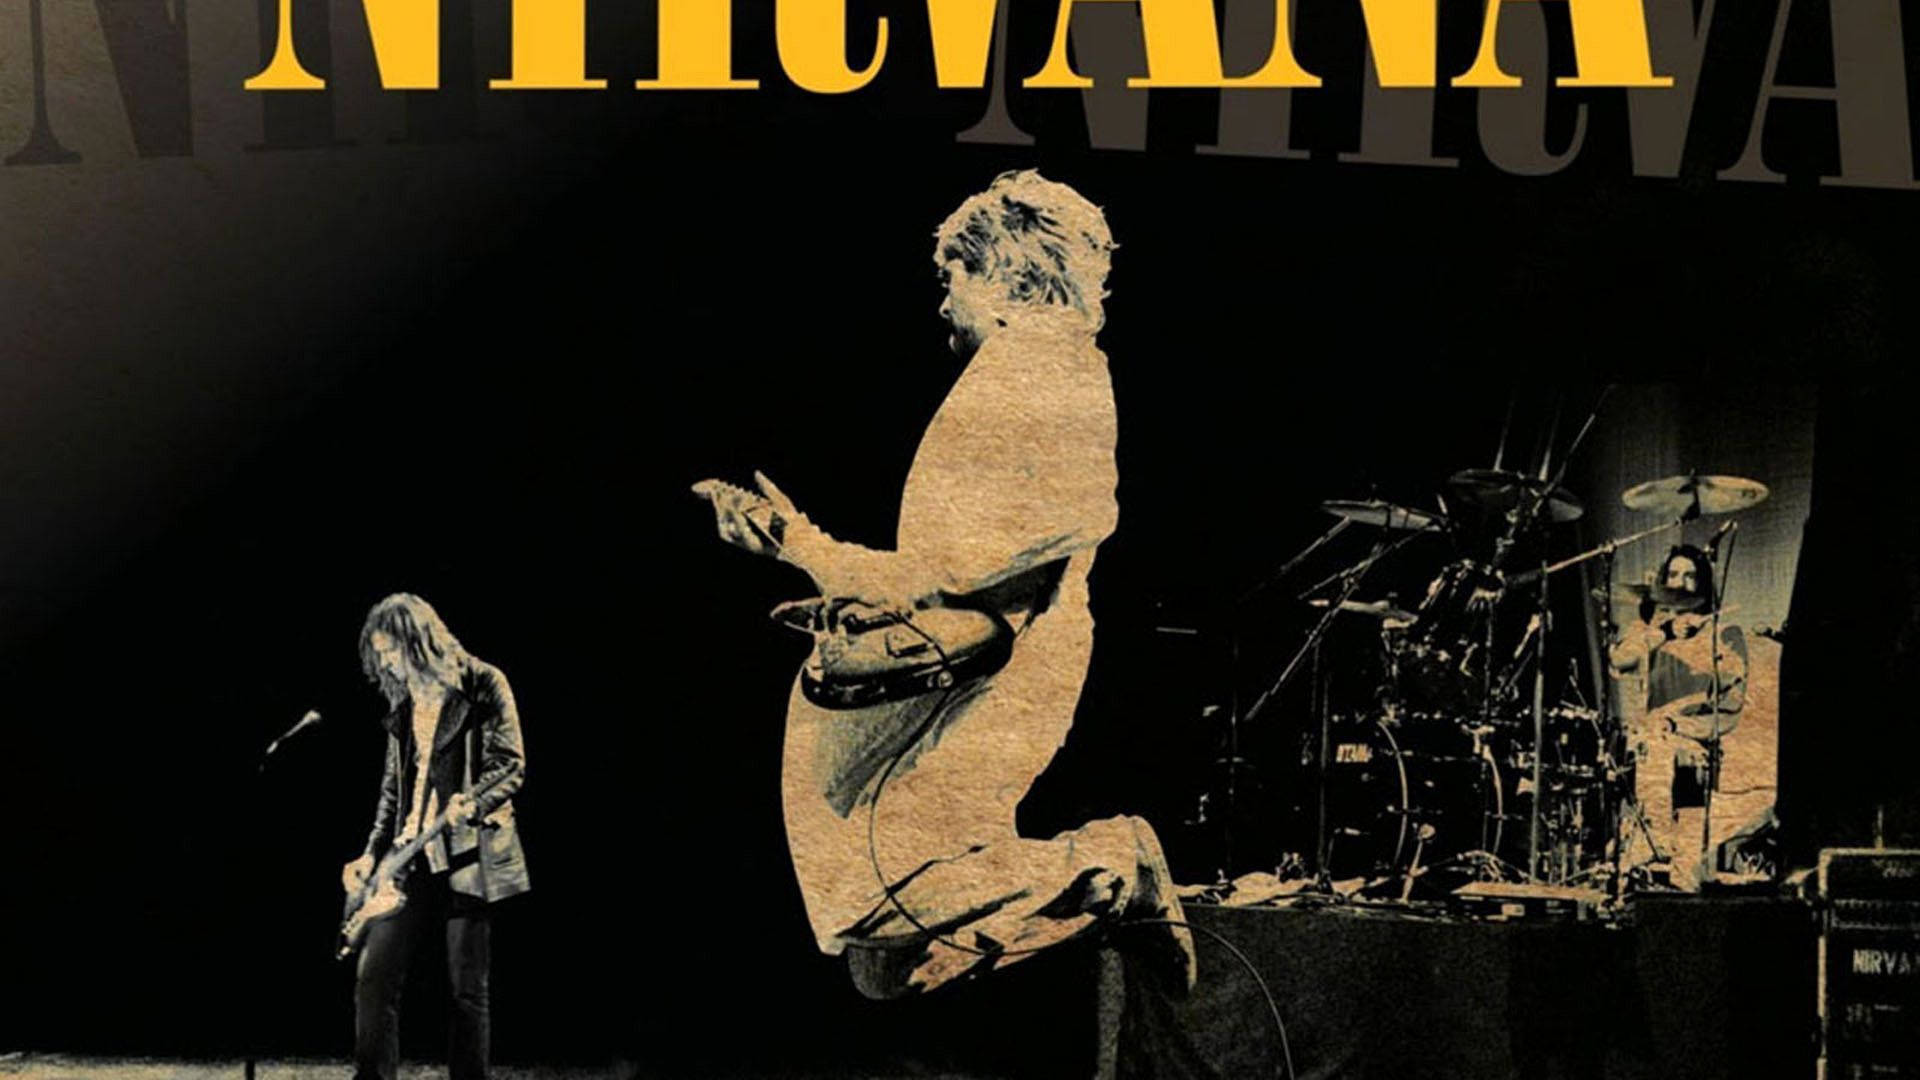 Download Nirvana Old Poster Wallpaper | Wallpapers.com